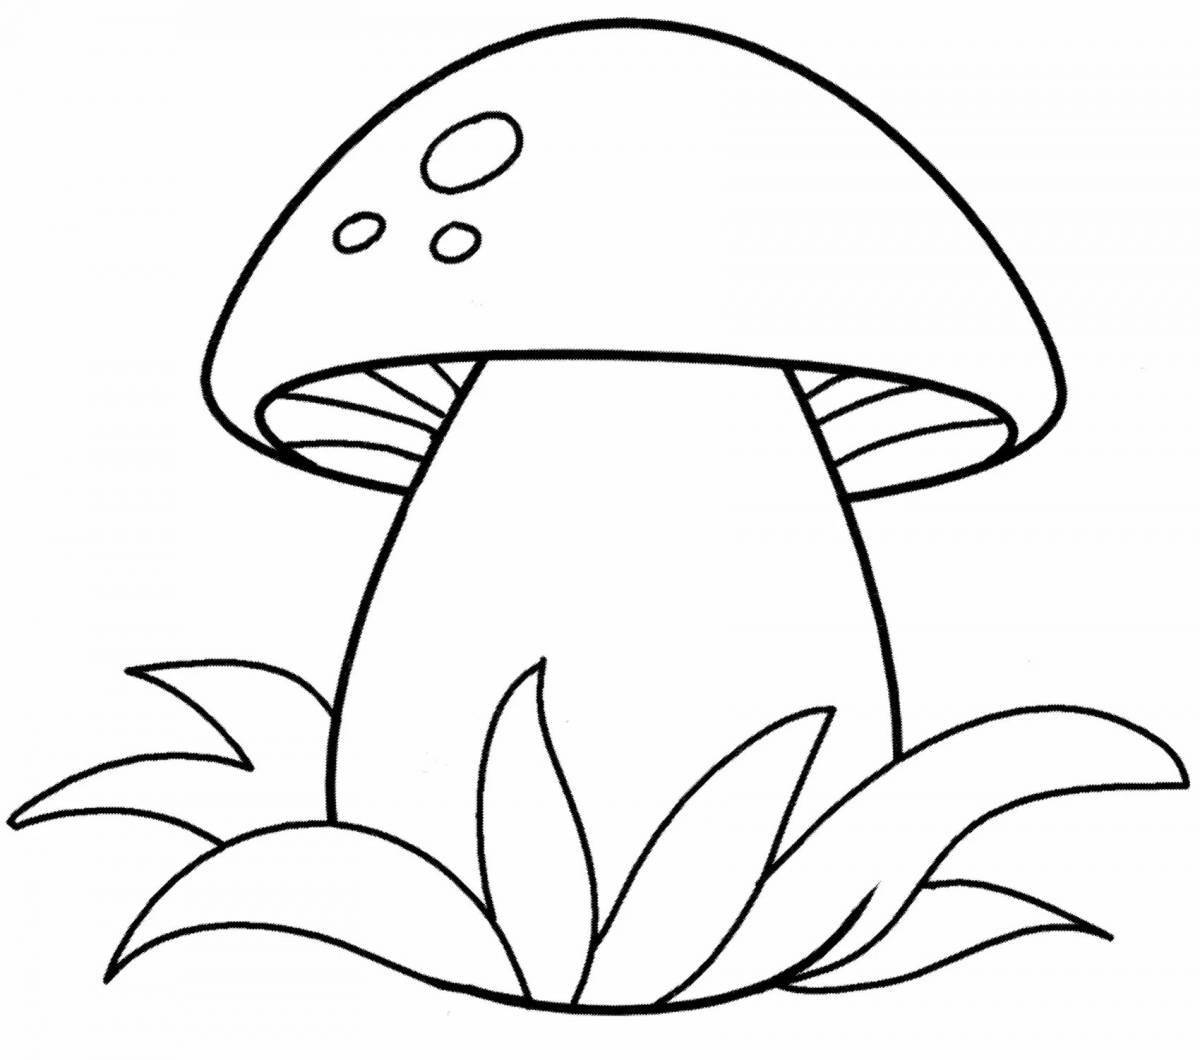 Coloring glossy mushroom